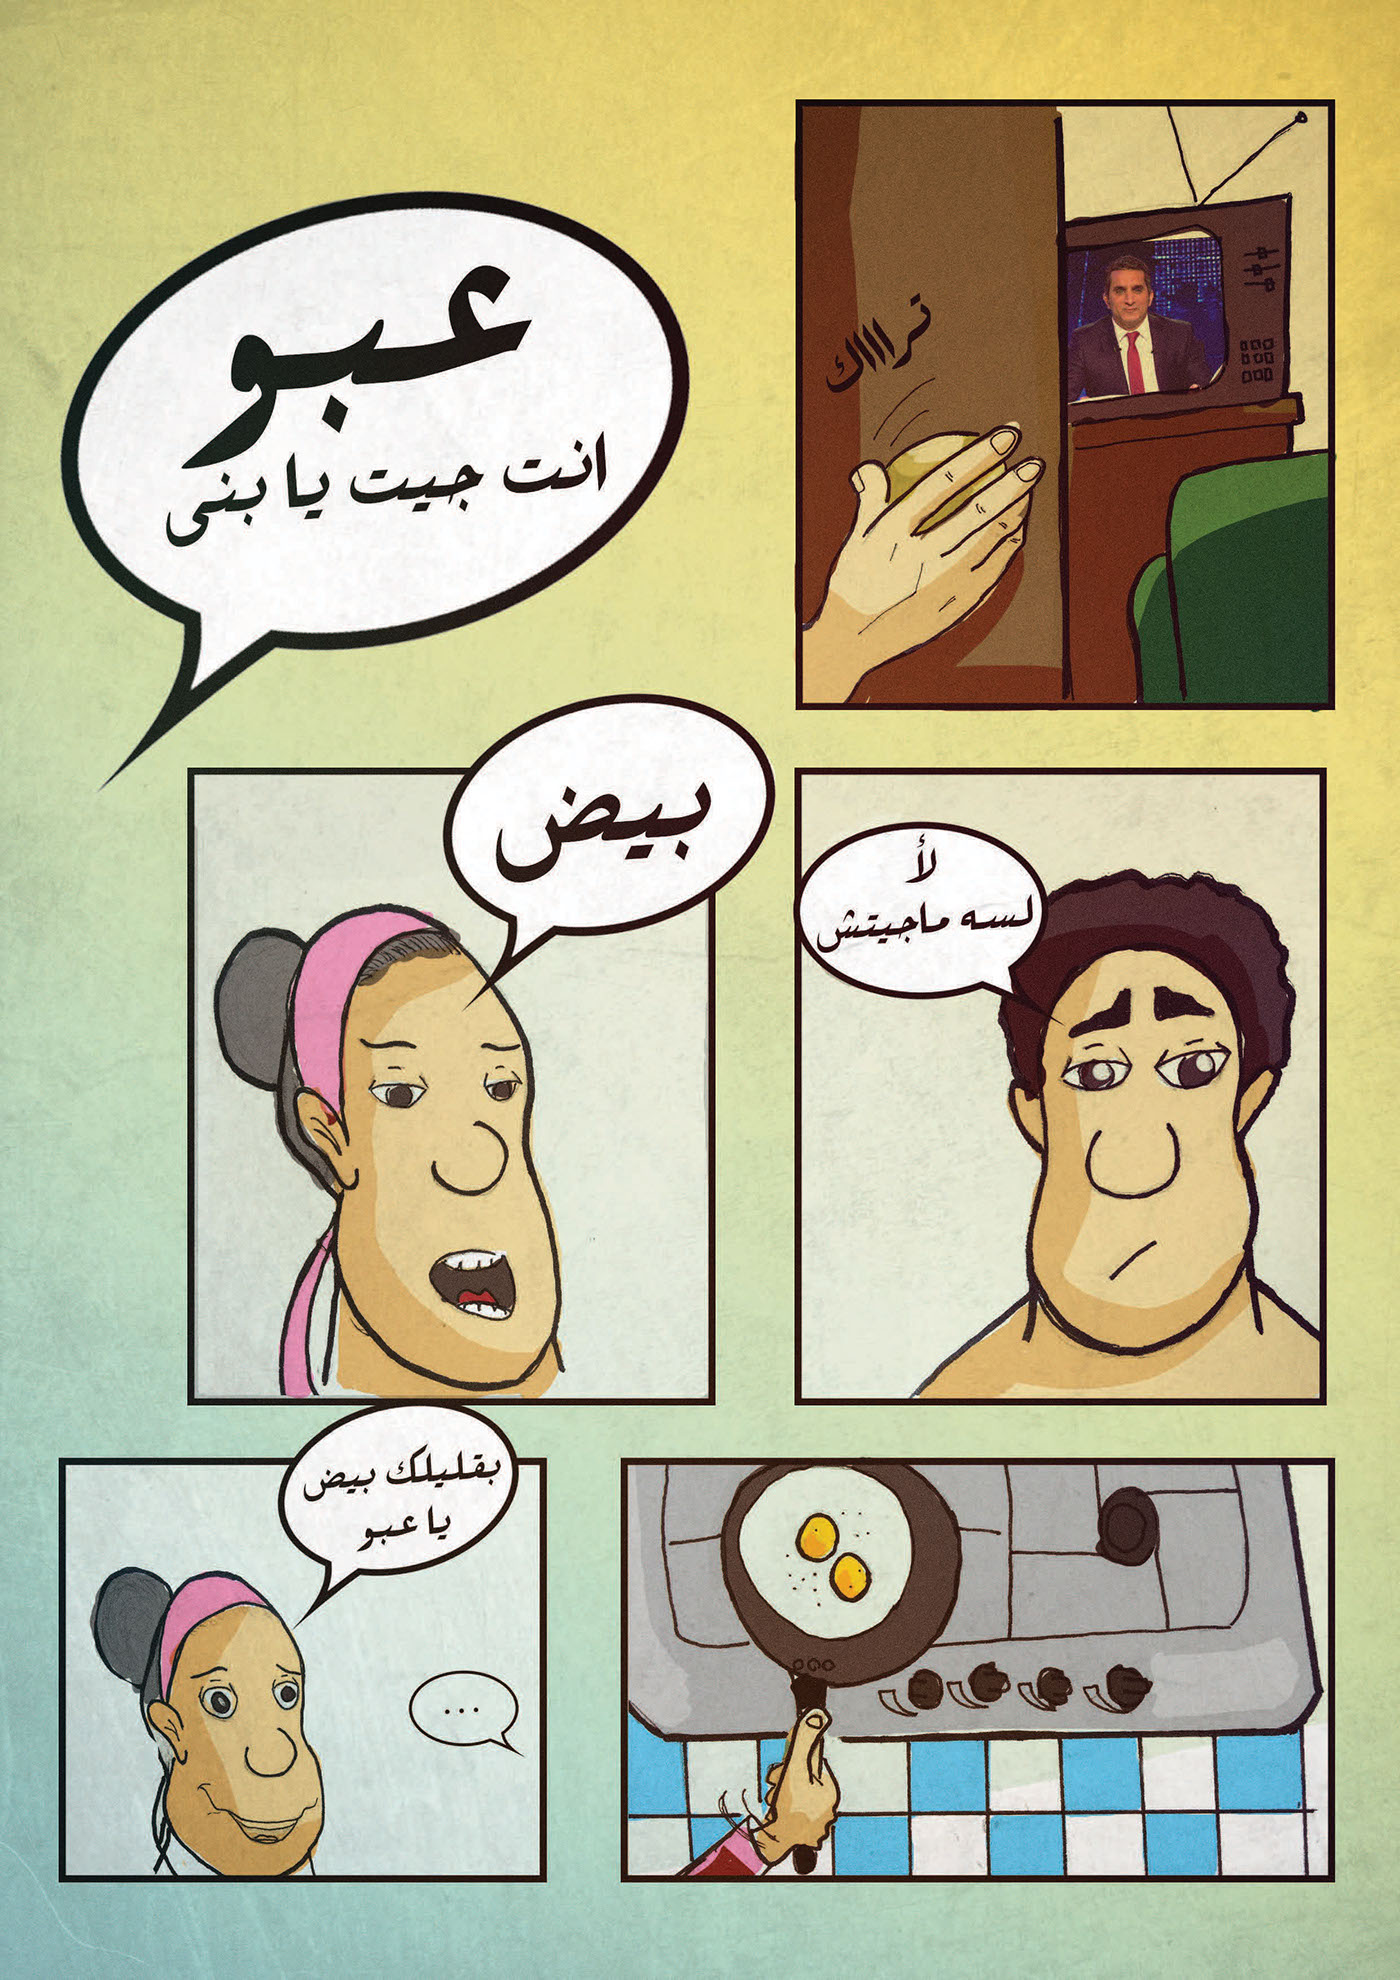 egyptian comics friendship life purpose Illustrator